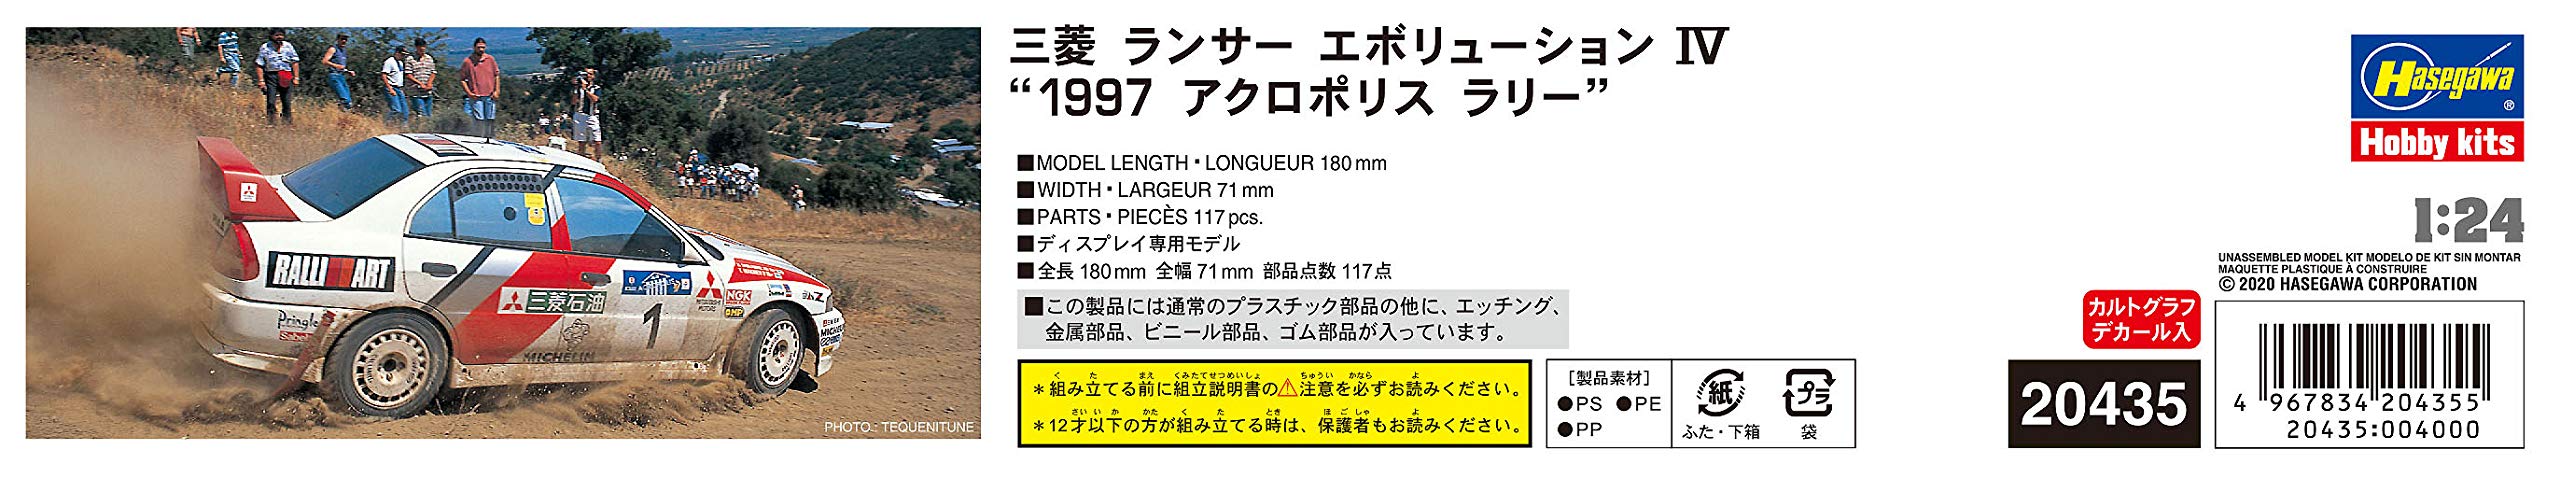 Hasegawa 1/24 Mitsubishi Lancer Evolution IV 1997 Acropolis Rally Plastic Model Toy